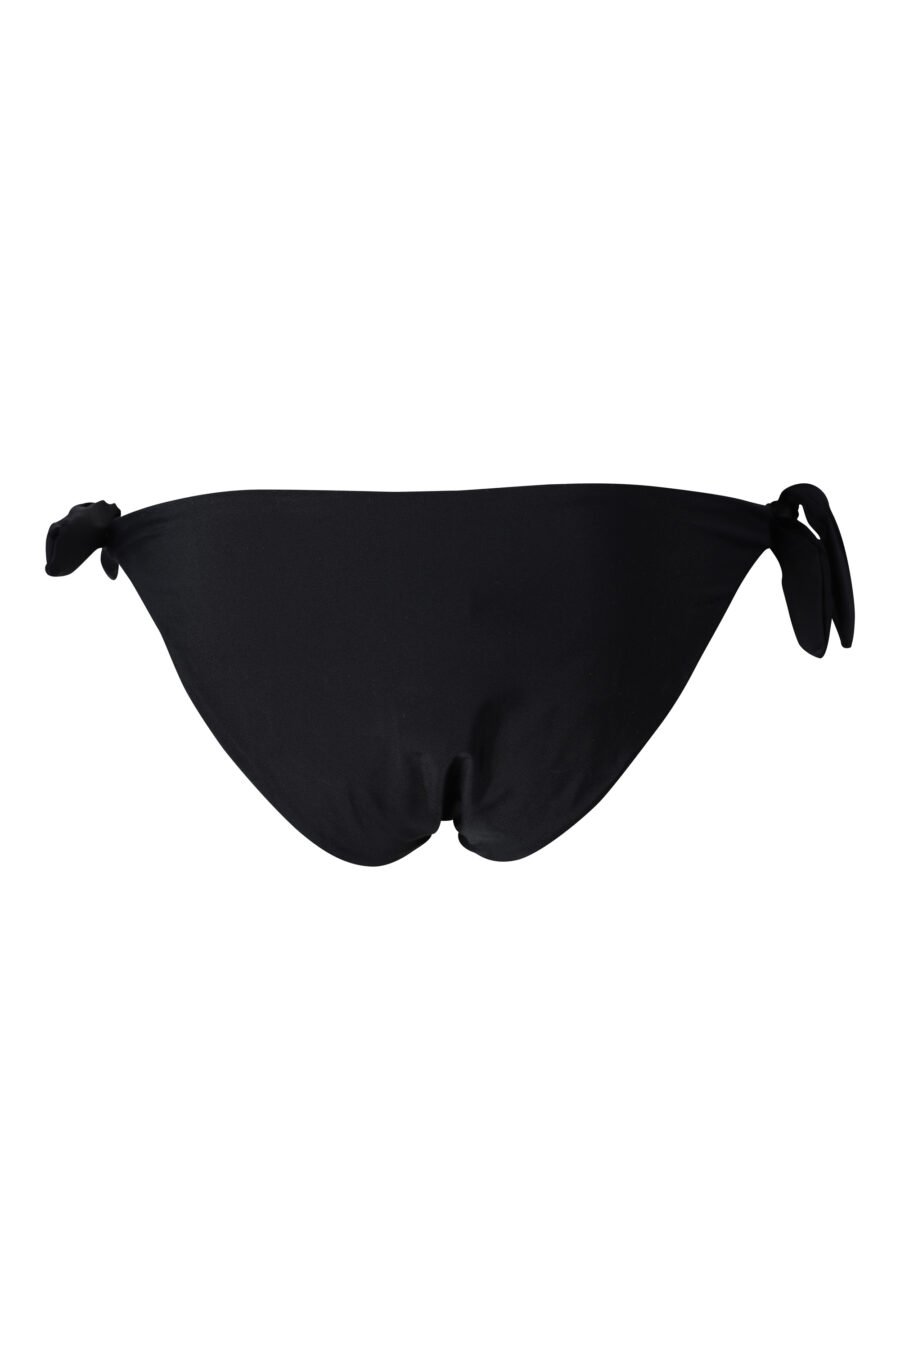 Braguita de bikini negro con maxilogo "animal print" y lazo lateral - IMG 2312